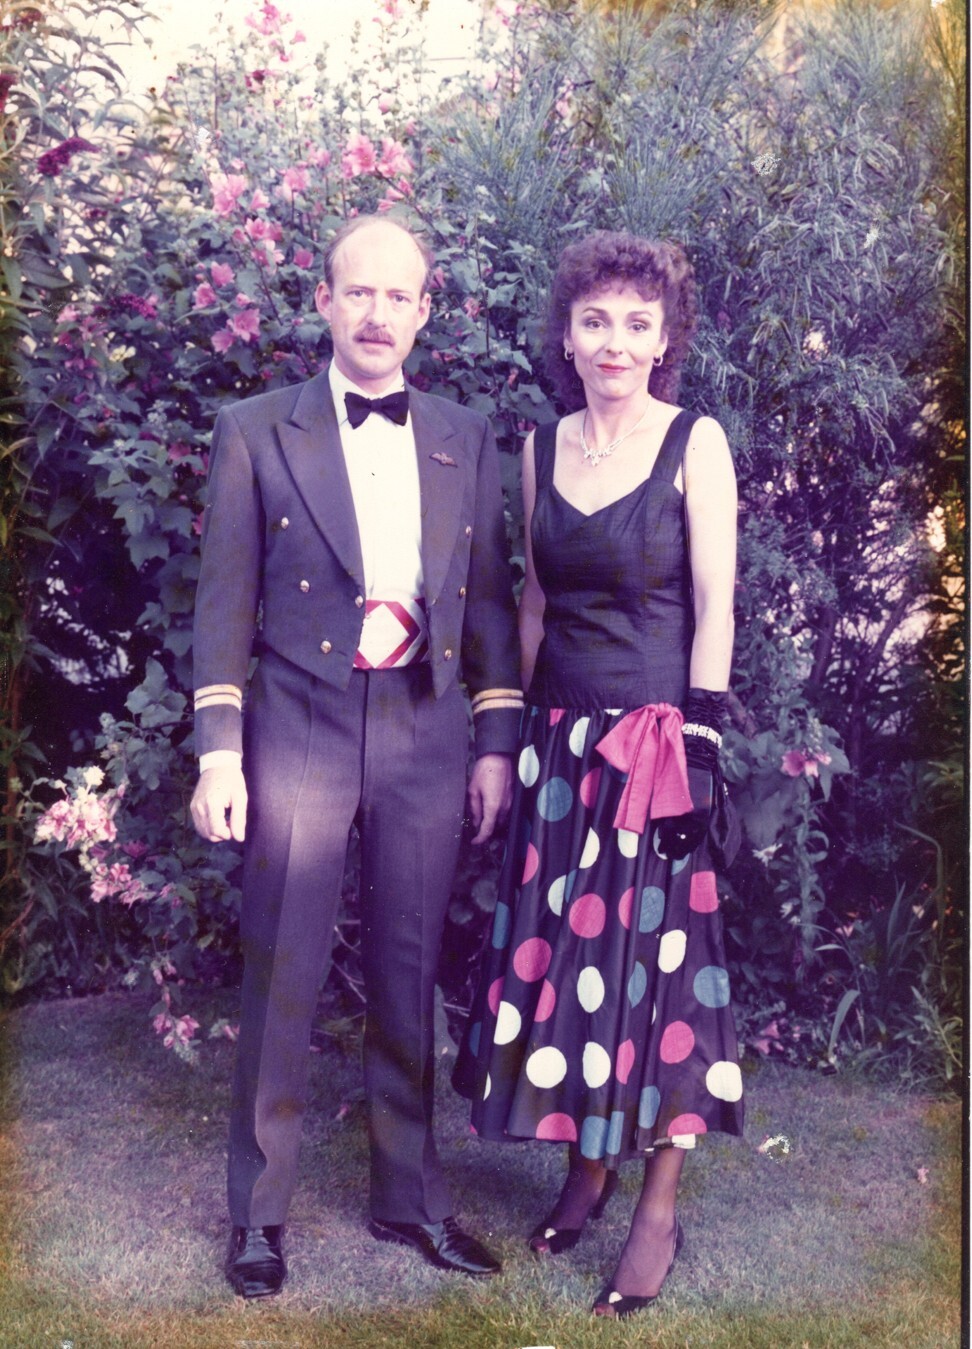 Newbery with his wife Nicola, circa 1990. Photo: courtesy of David Newbery